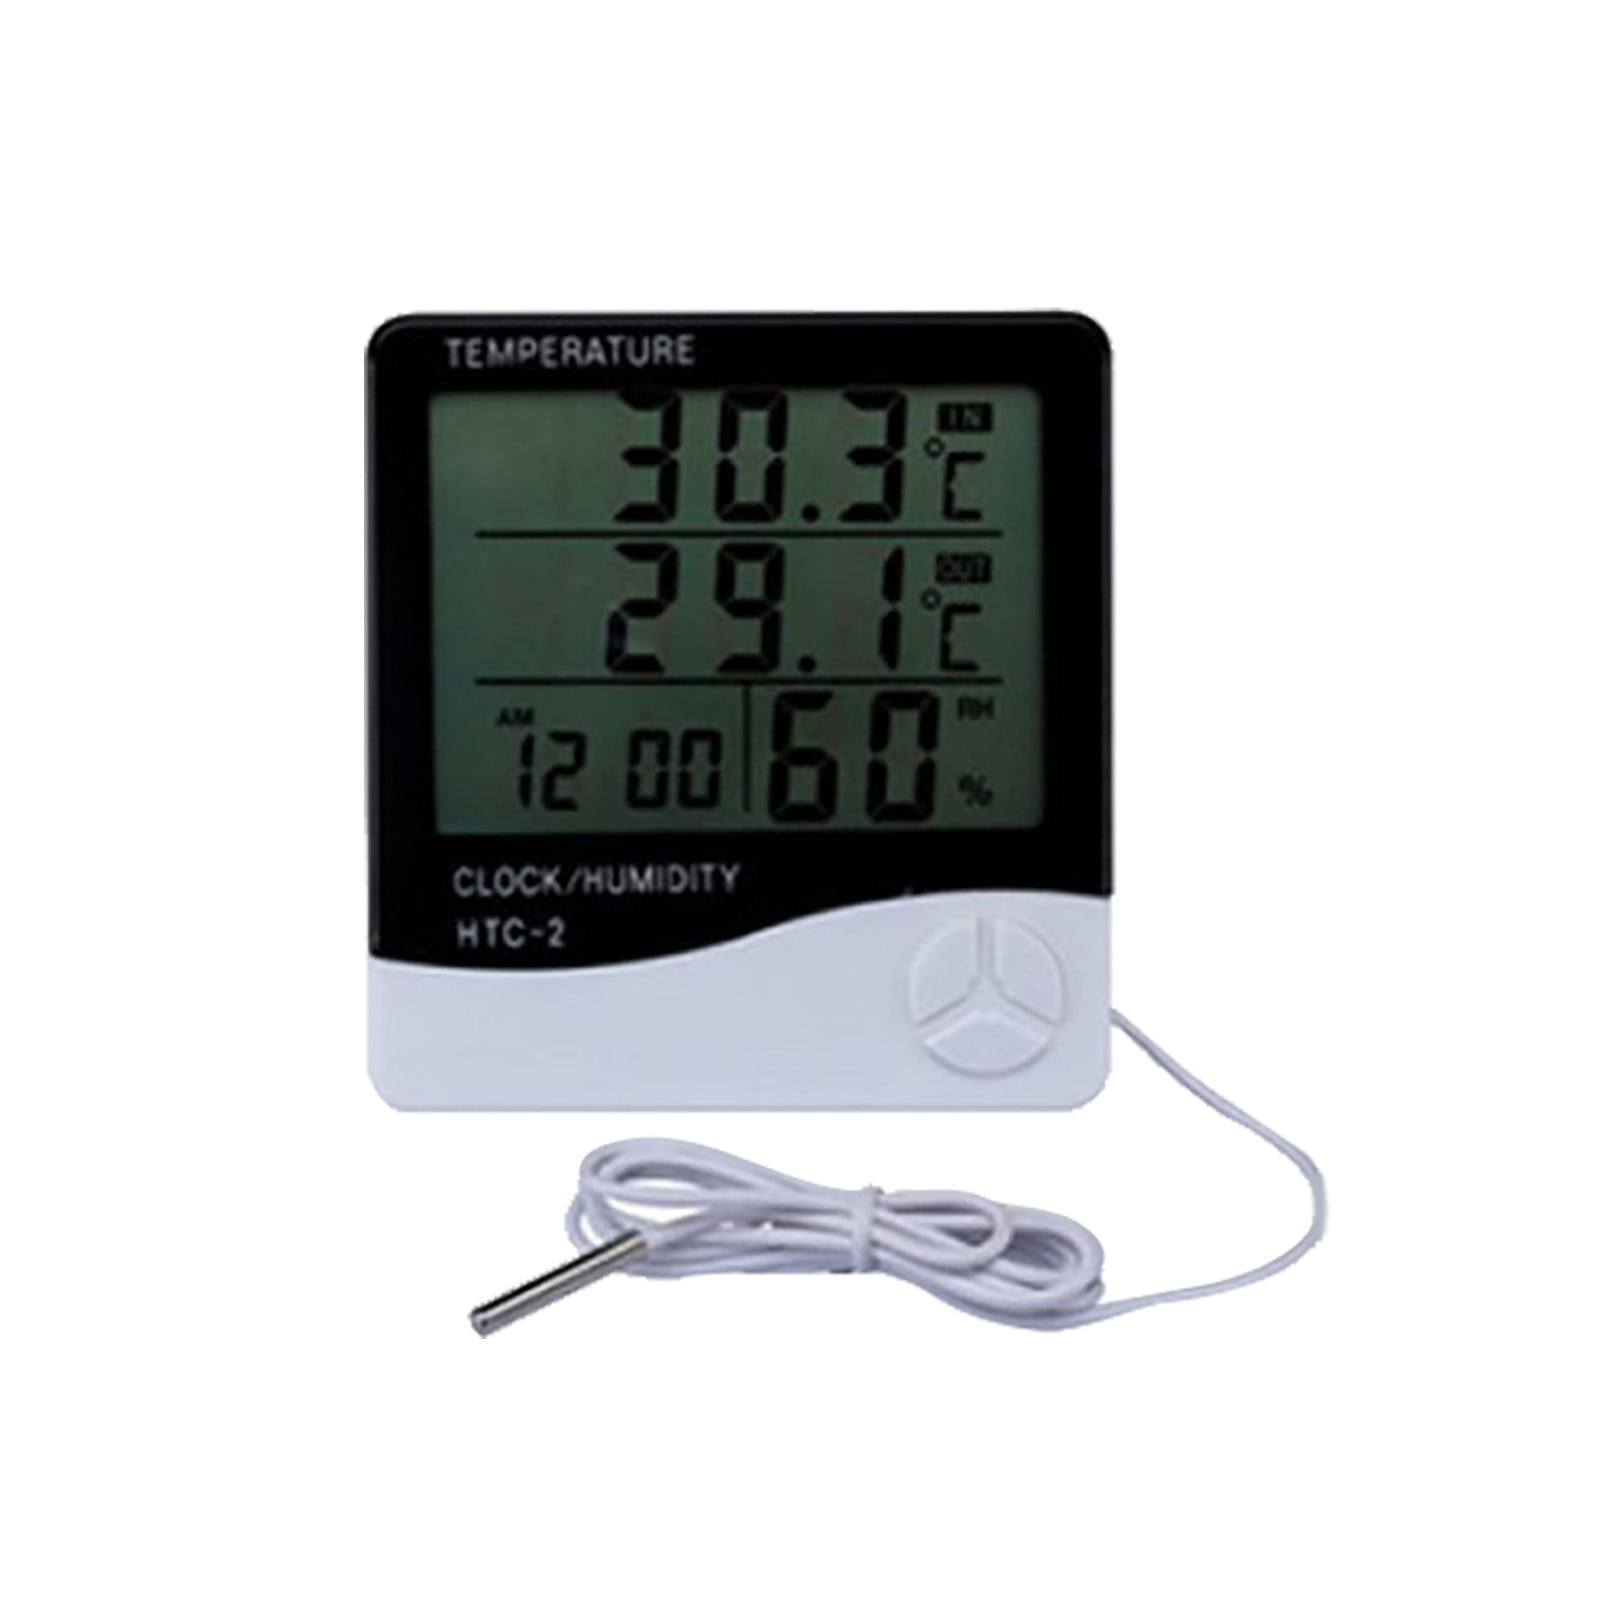 HTC-2 Digital Hygrometer Indoor Thermometer Room Gauge Humidity Monitor Better Homes & Gardens - Walmart.com